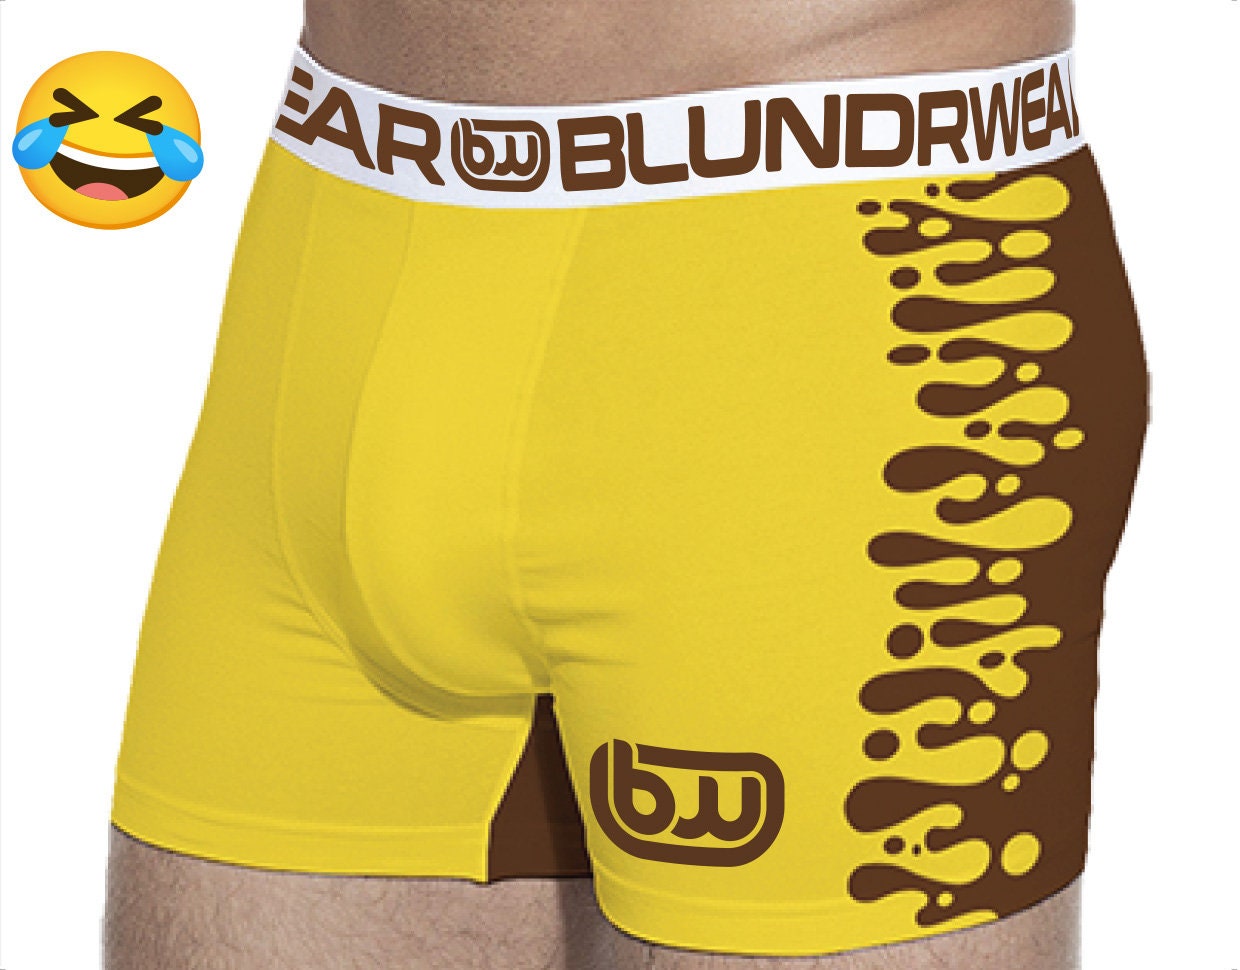 GIERIDUC Mens Dual Pouch Elephant Underwear Trunk Gay Underwear For Men  Bottom See Through Swimsuits Men Boxer Briefs Near Me